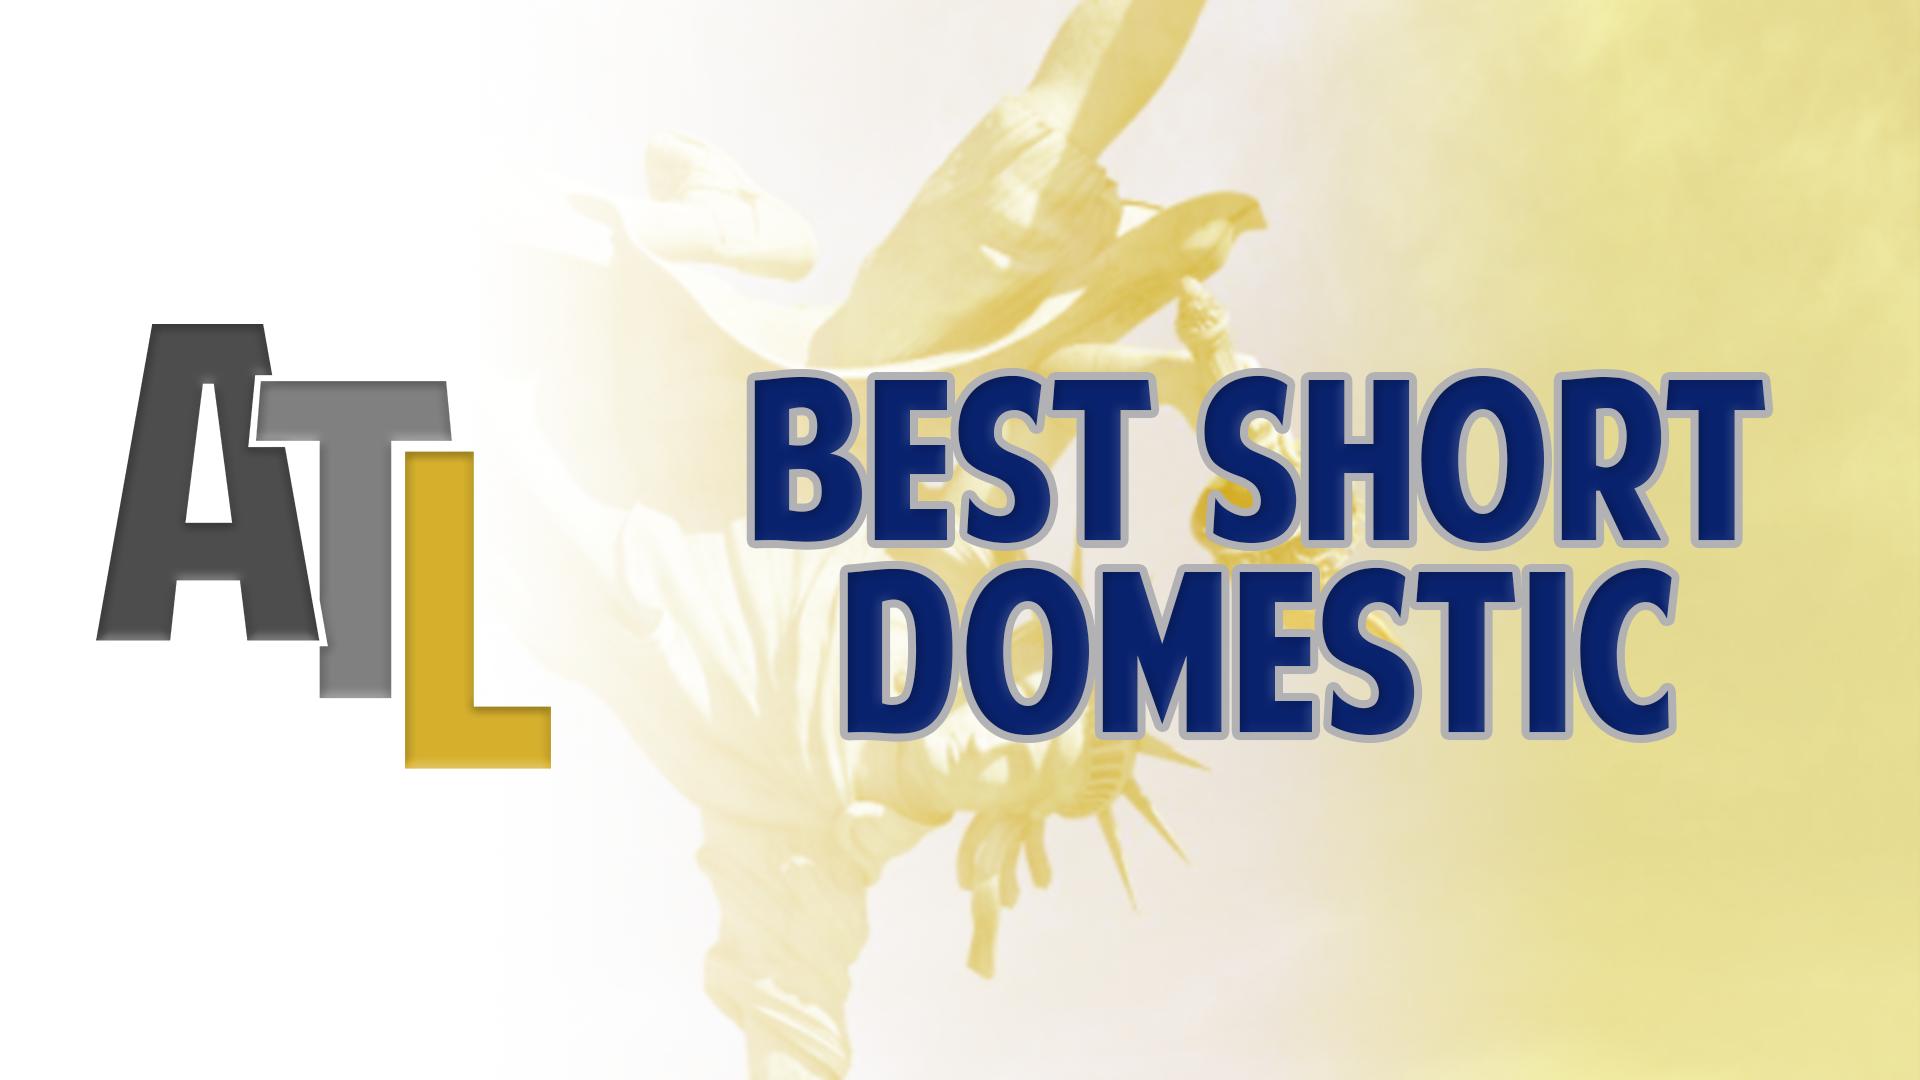 Best Short Film - Domestic